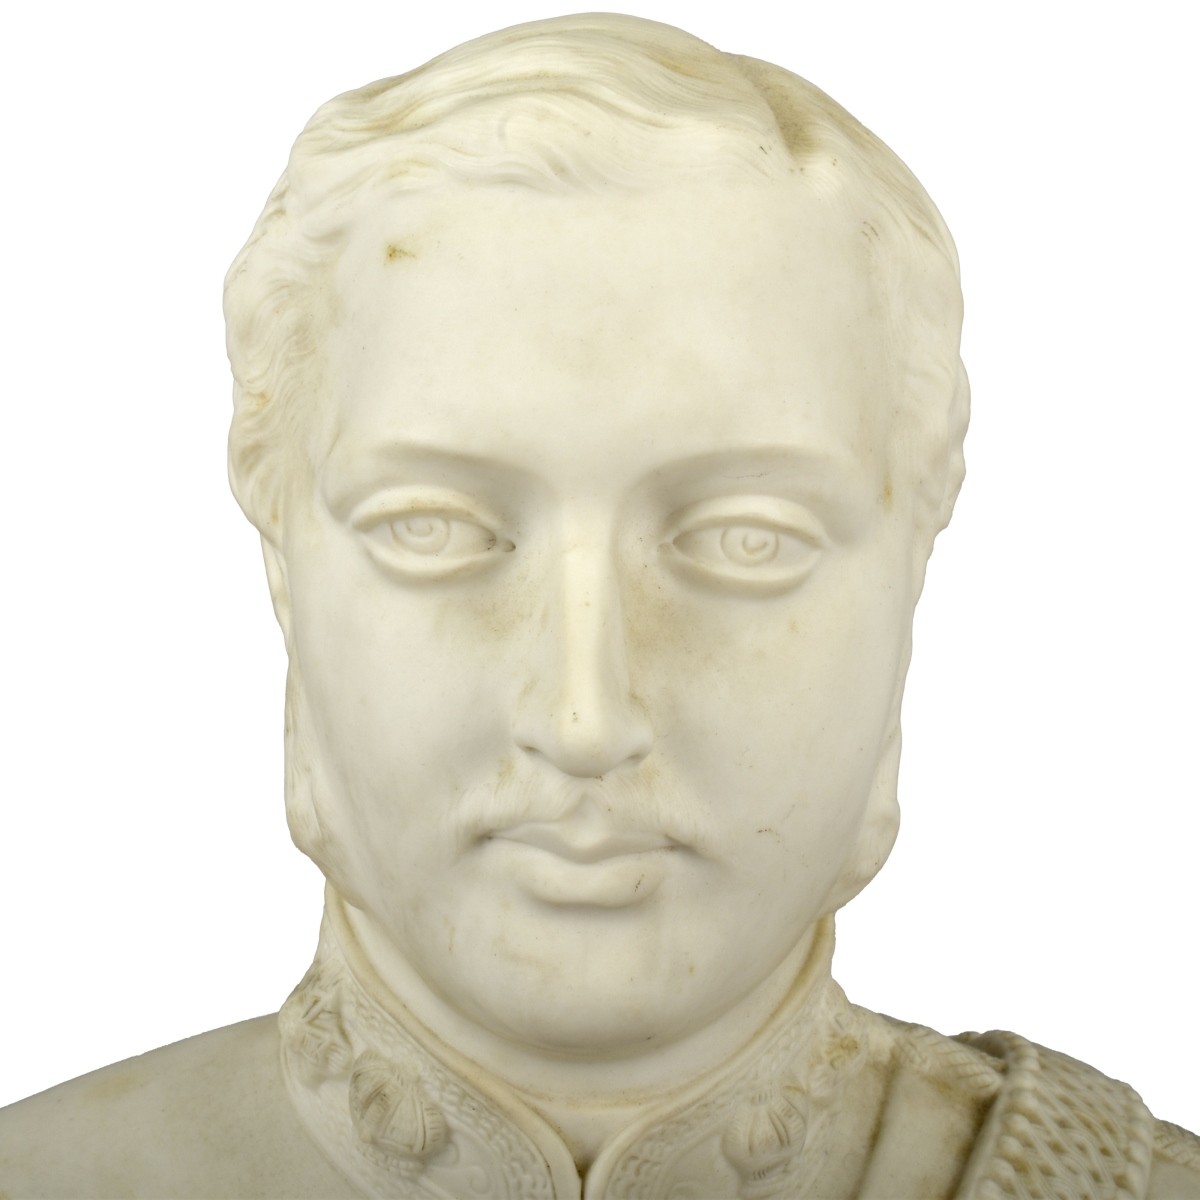 Parian Bust of Prince Albert Edward